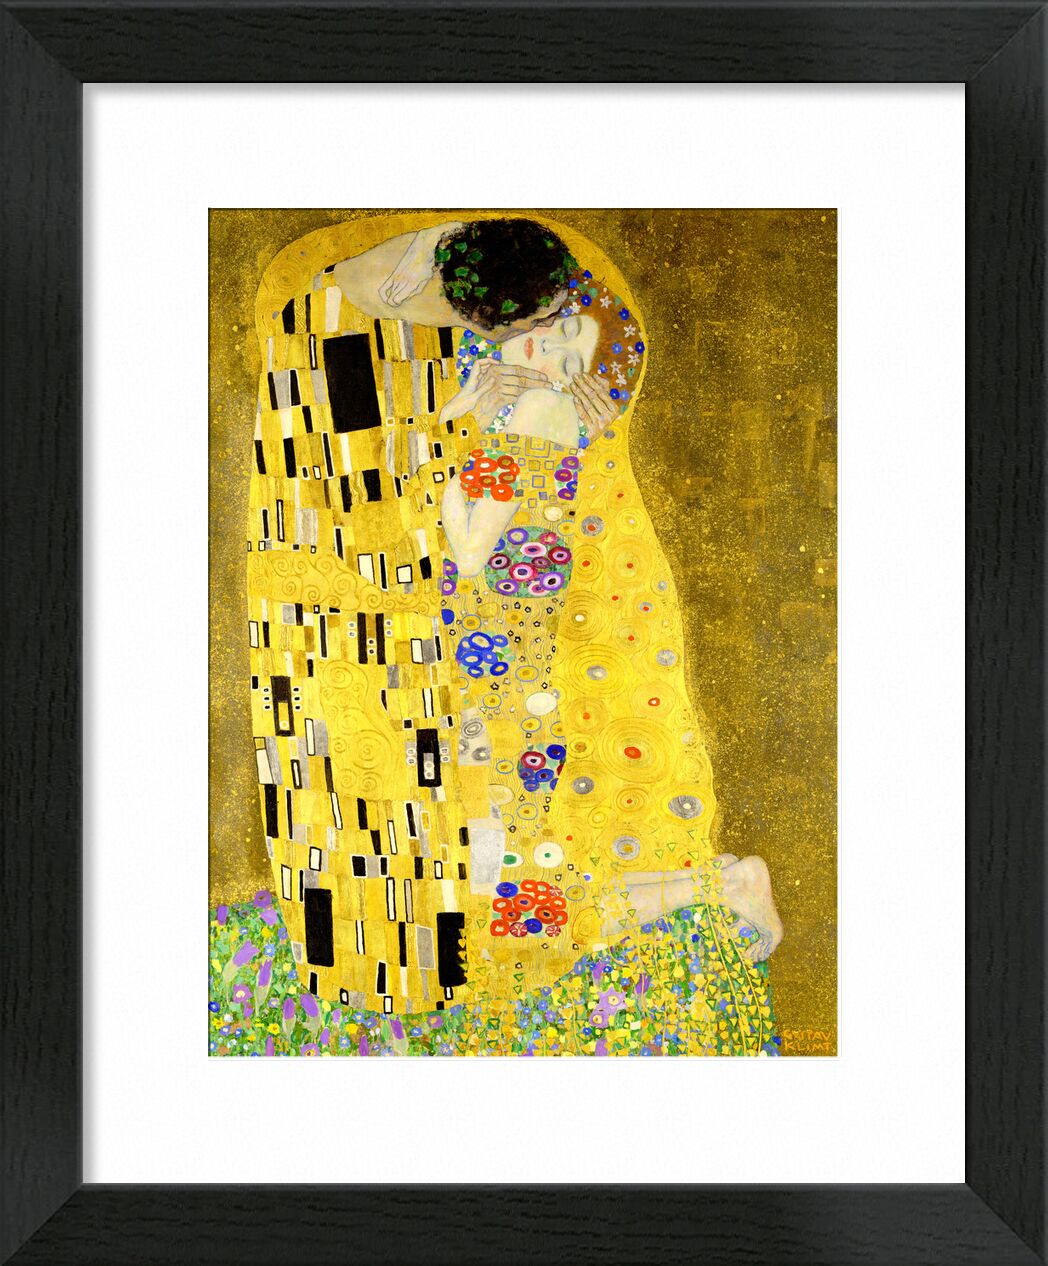 Details of the artwork The kiss - Gustav Klimt desde Bellas artes, Prodi Art, KLIMT, art nouveau, Beso, hombre, mujer, Pareja, amor, vestido, pintura